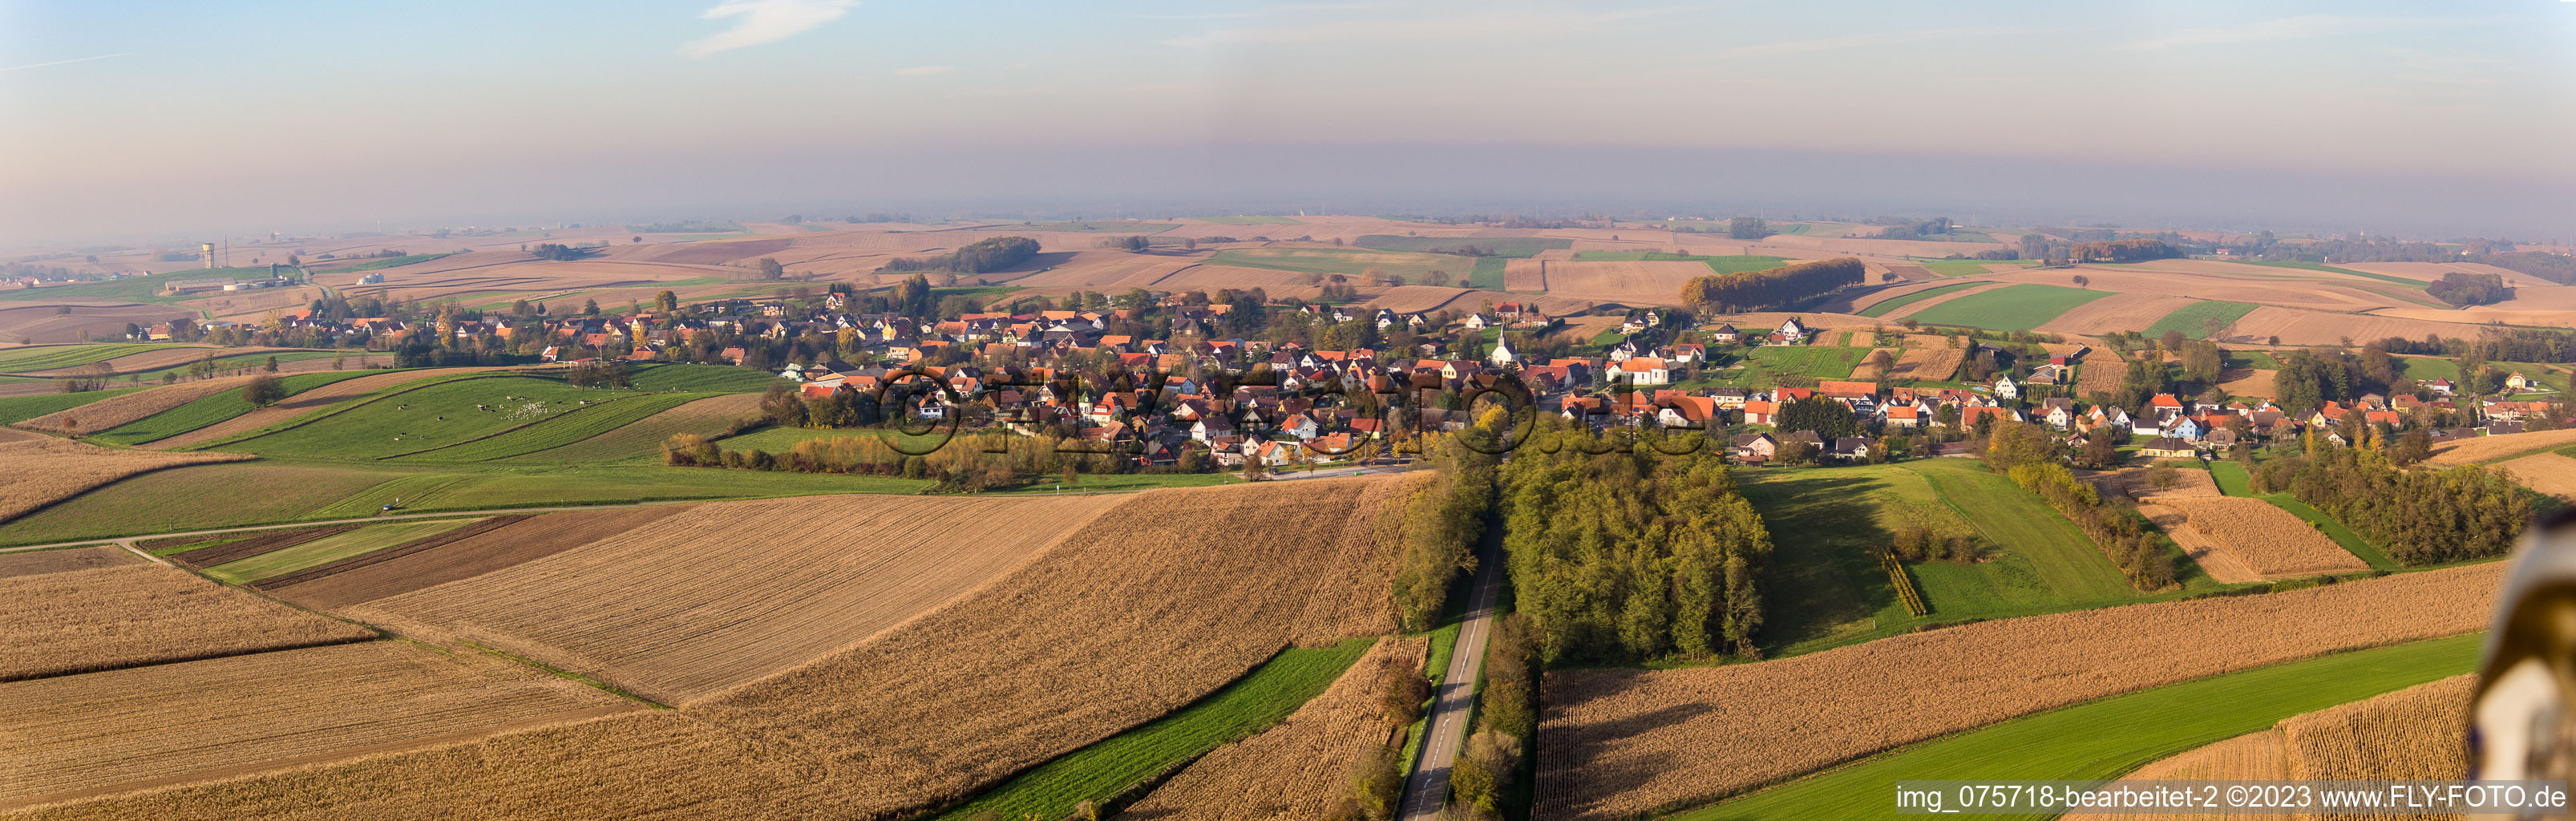 Panorama in Wintzenbach im Bundesland Bas-Rhin, Frankreich